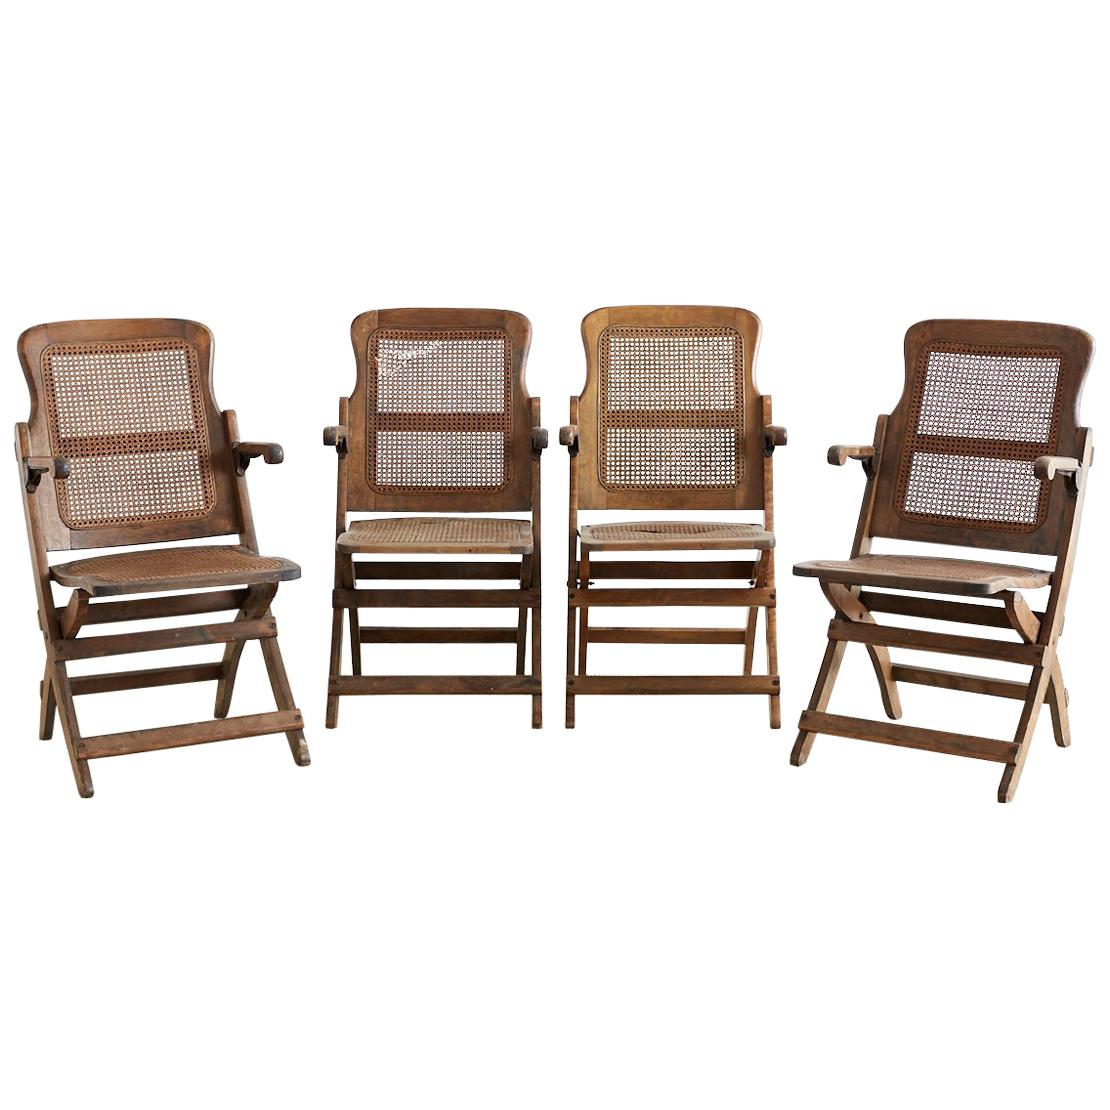 Set of Four Ocean Steamer Folding Deck Chairs